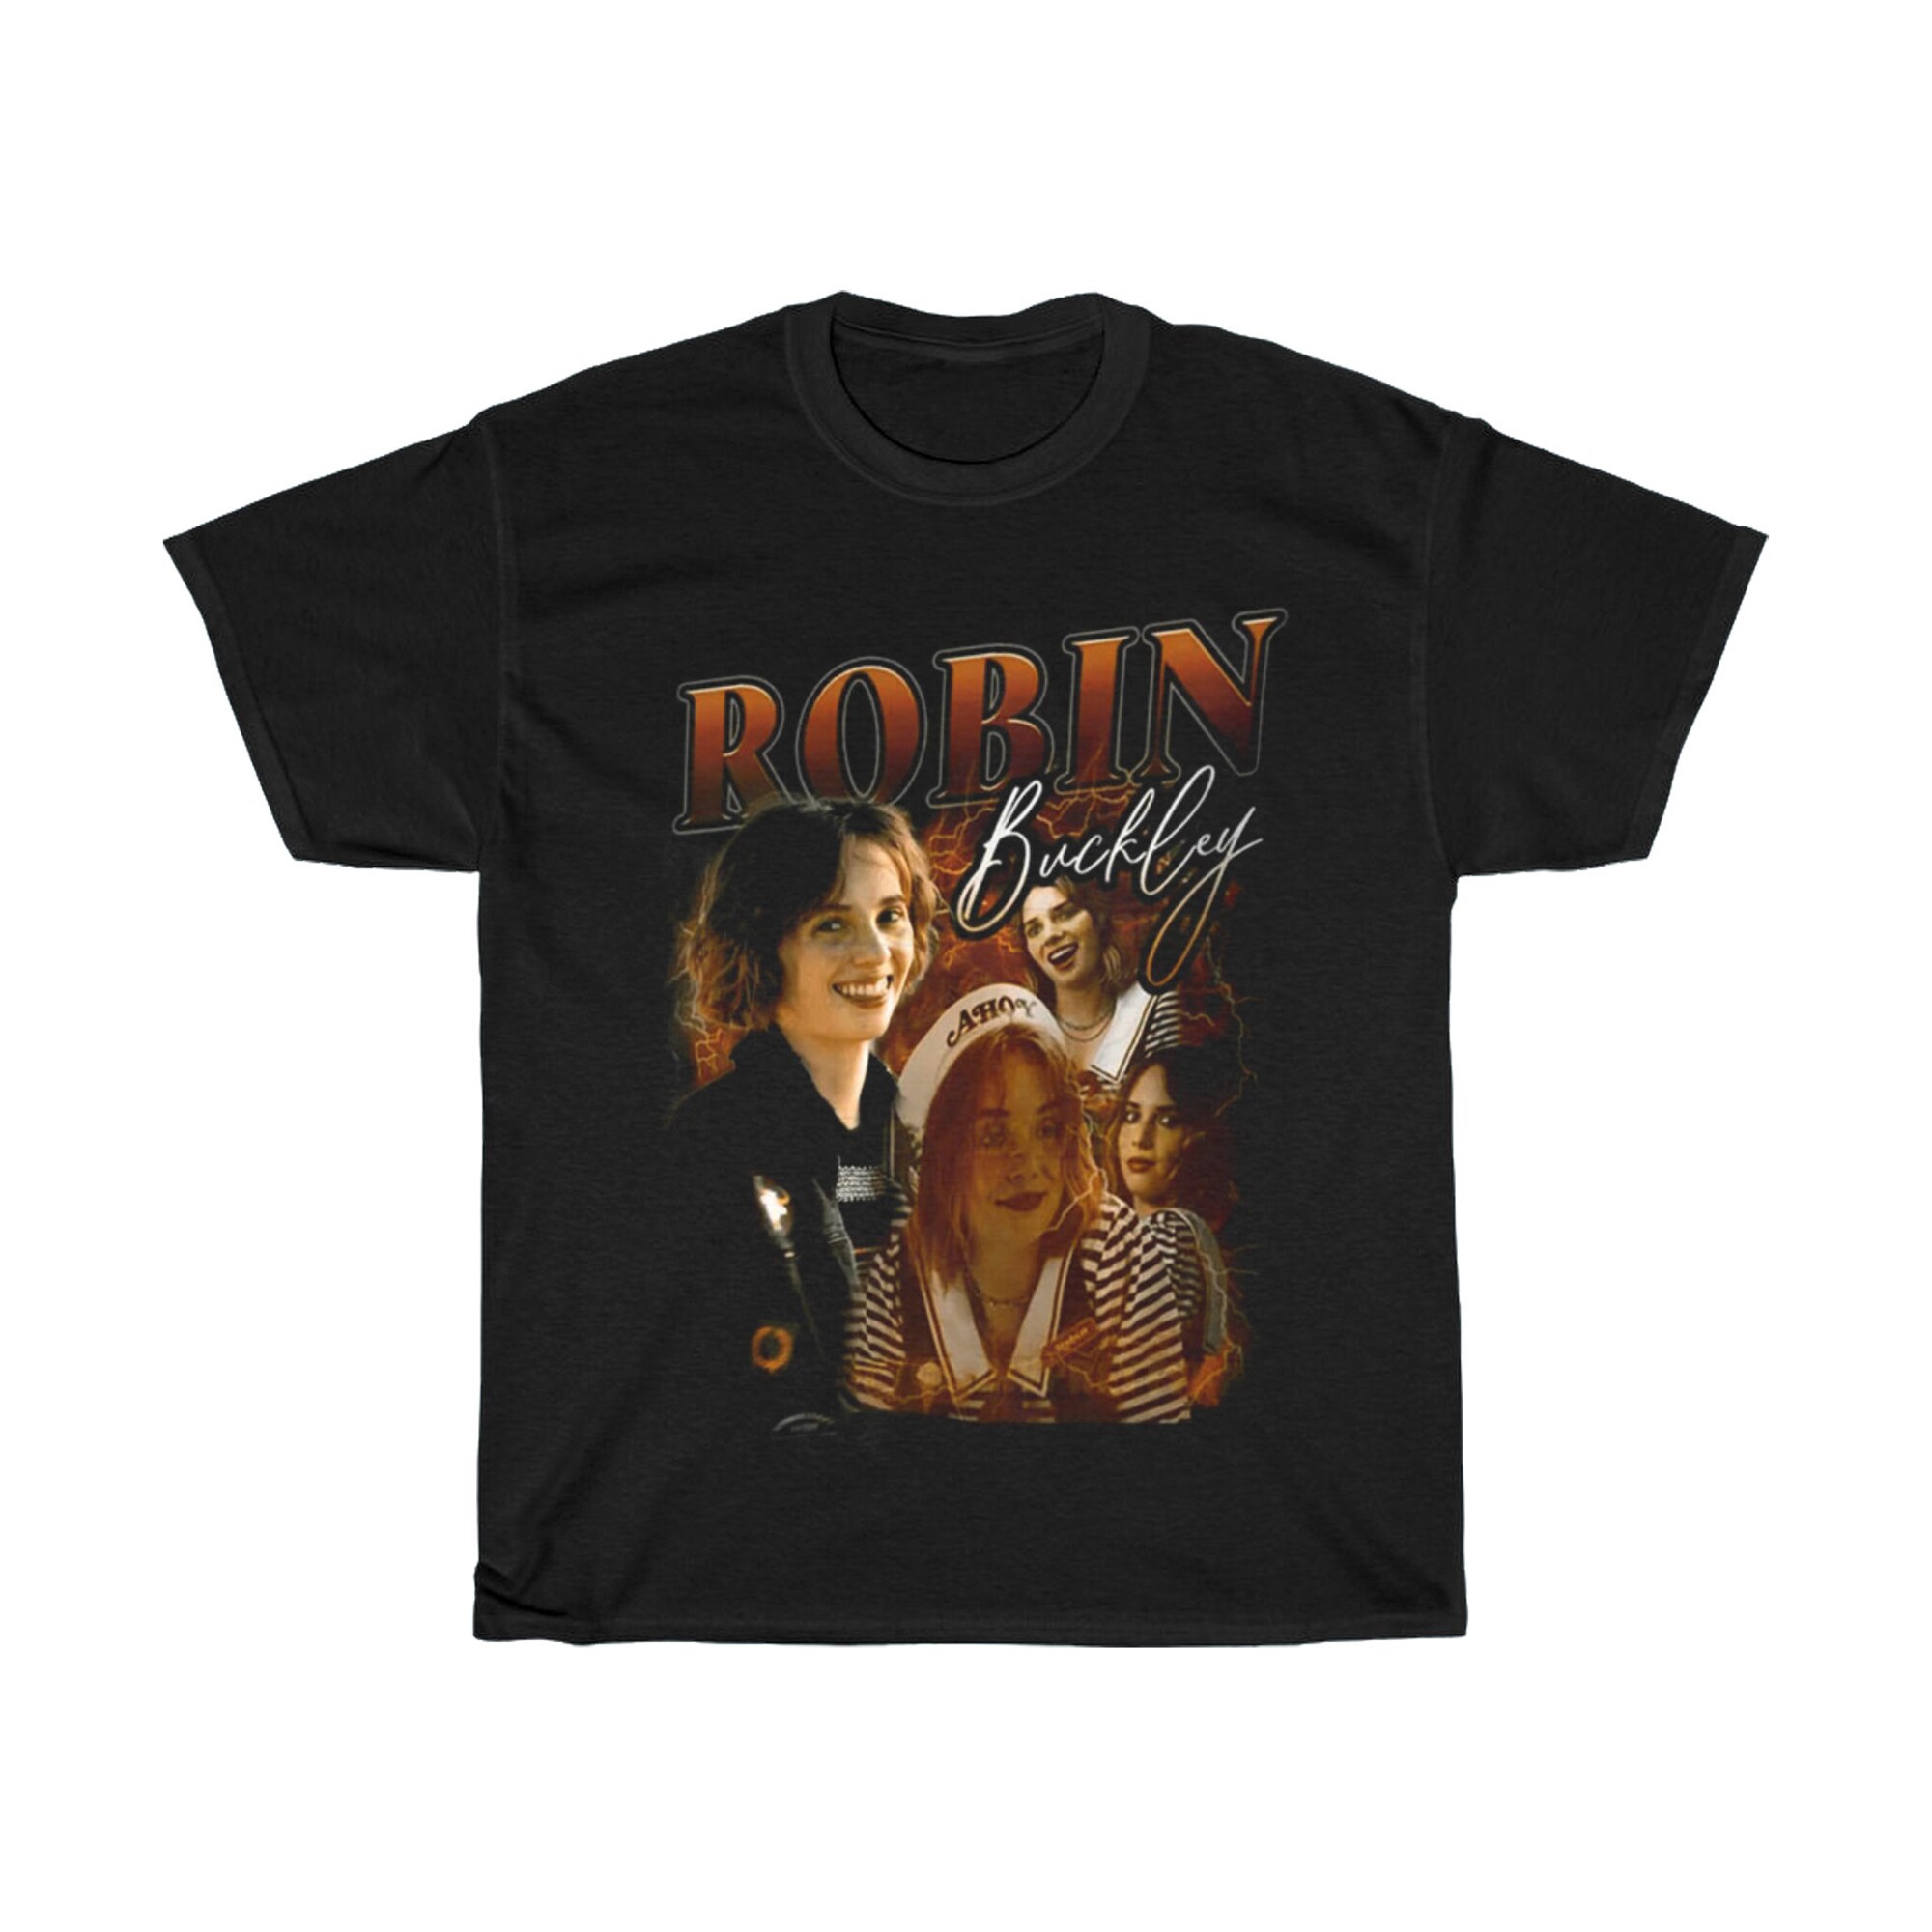 Robin Buckley shirt, Vintage Robin Buckley Stranger Things 4 shirt